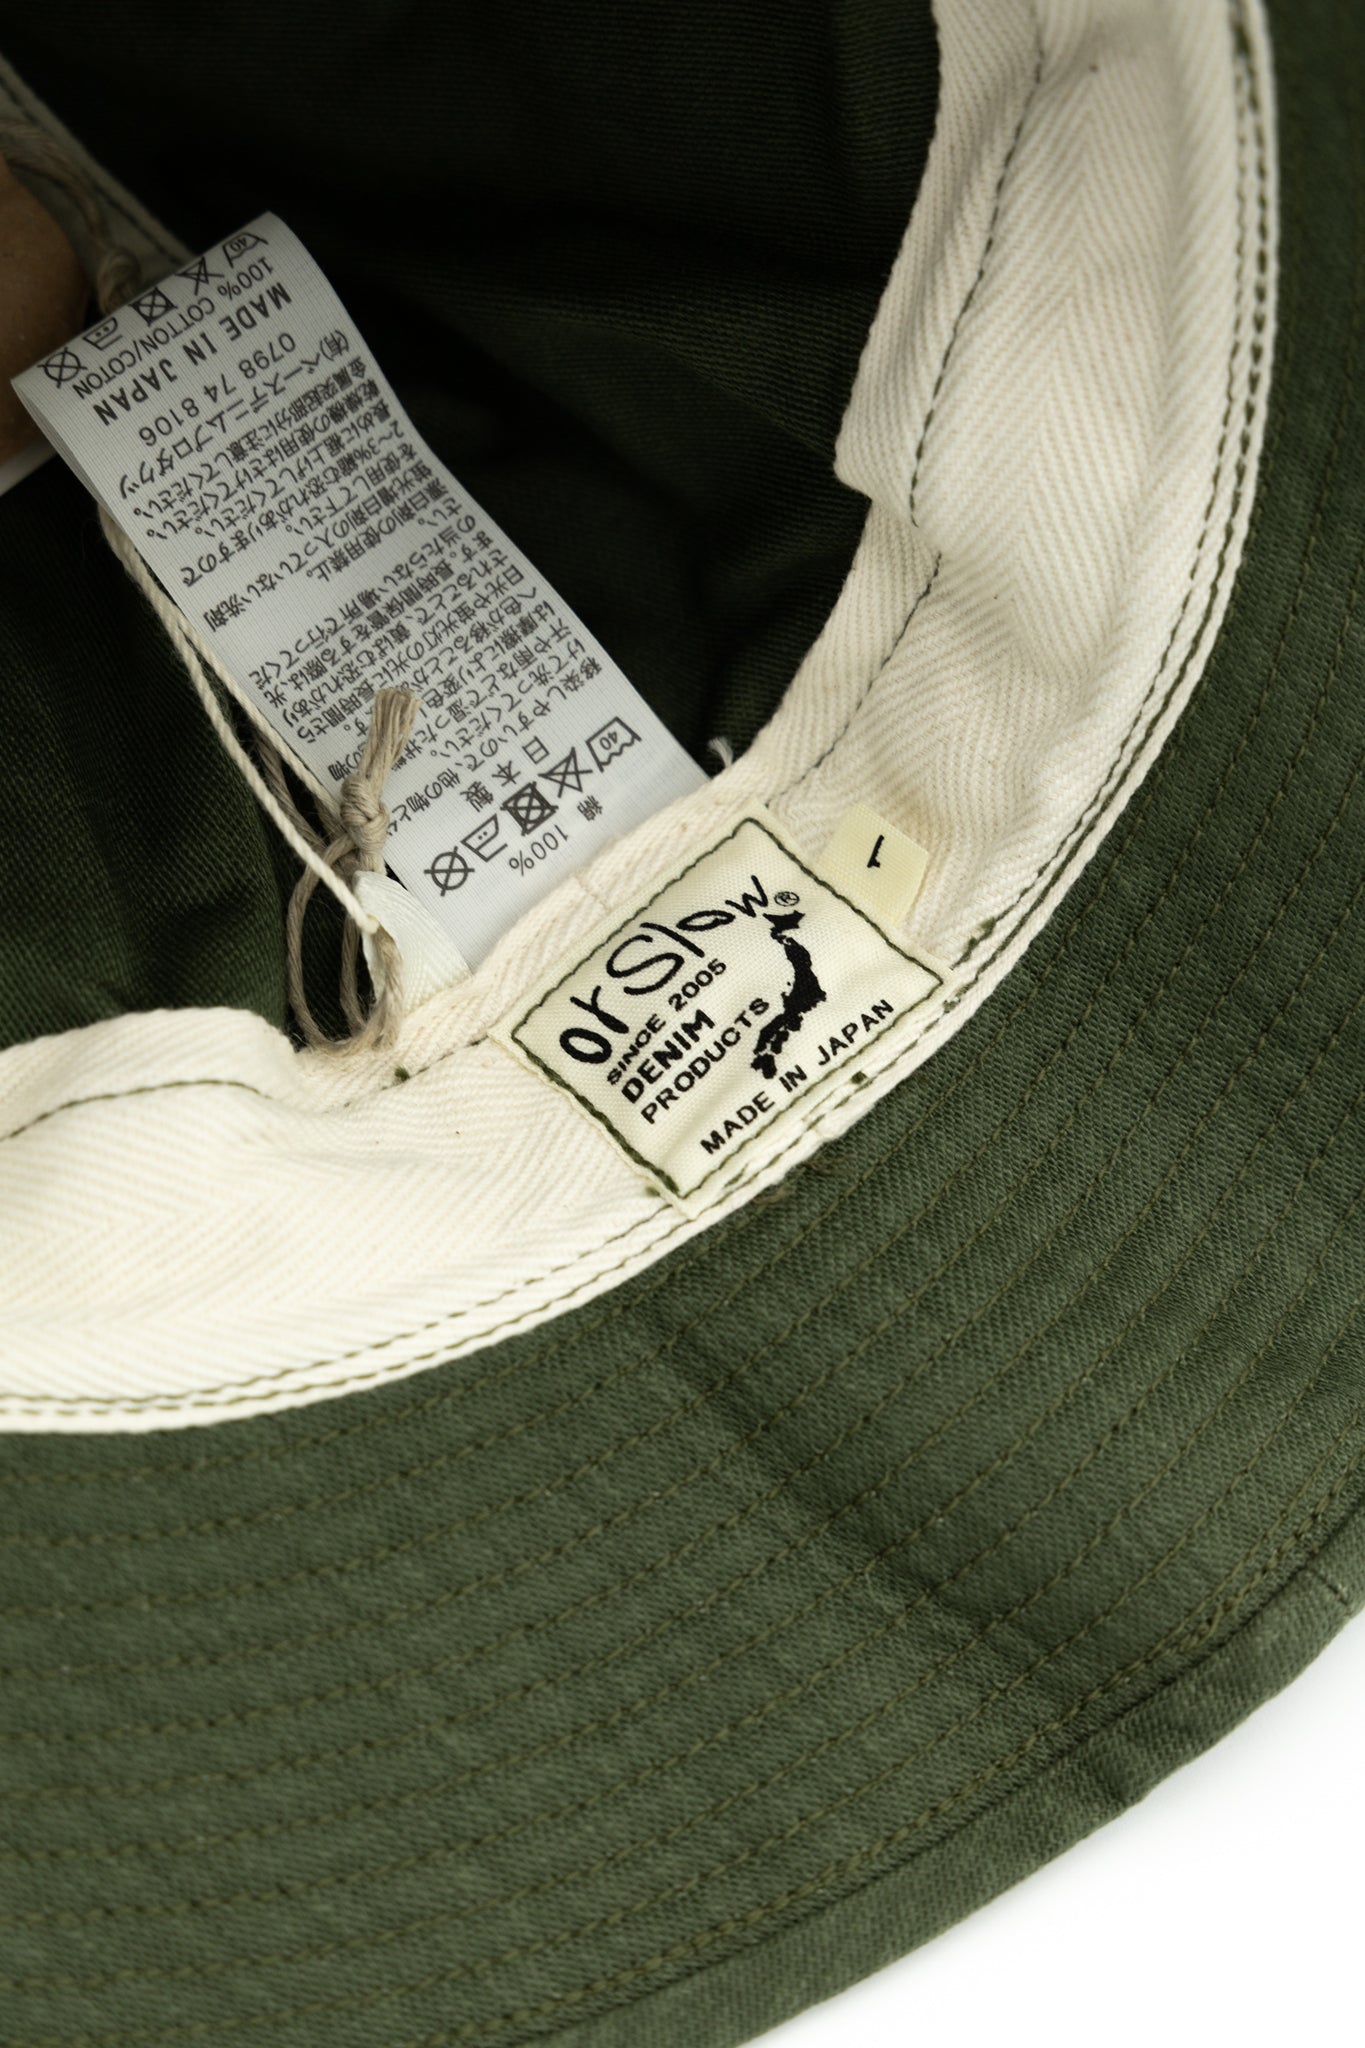 US NAVY Hat Reverse Sateen - Green